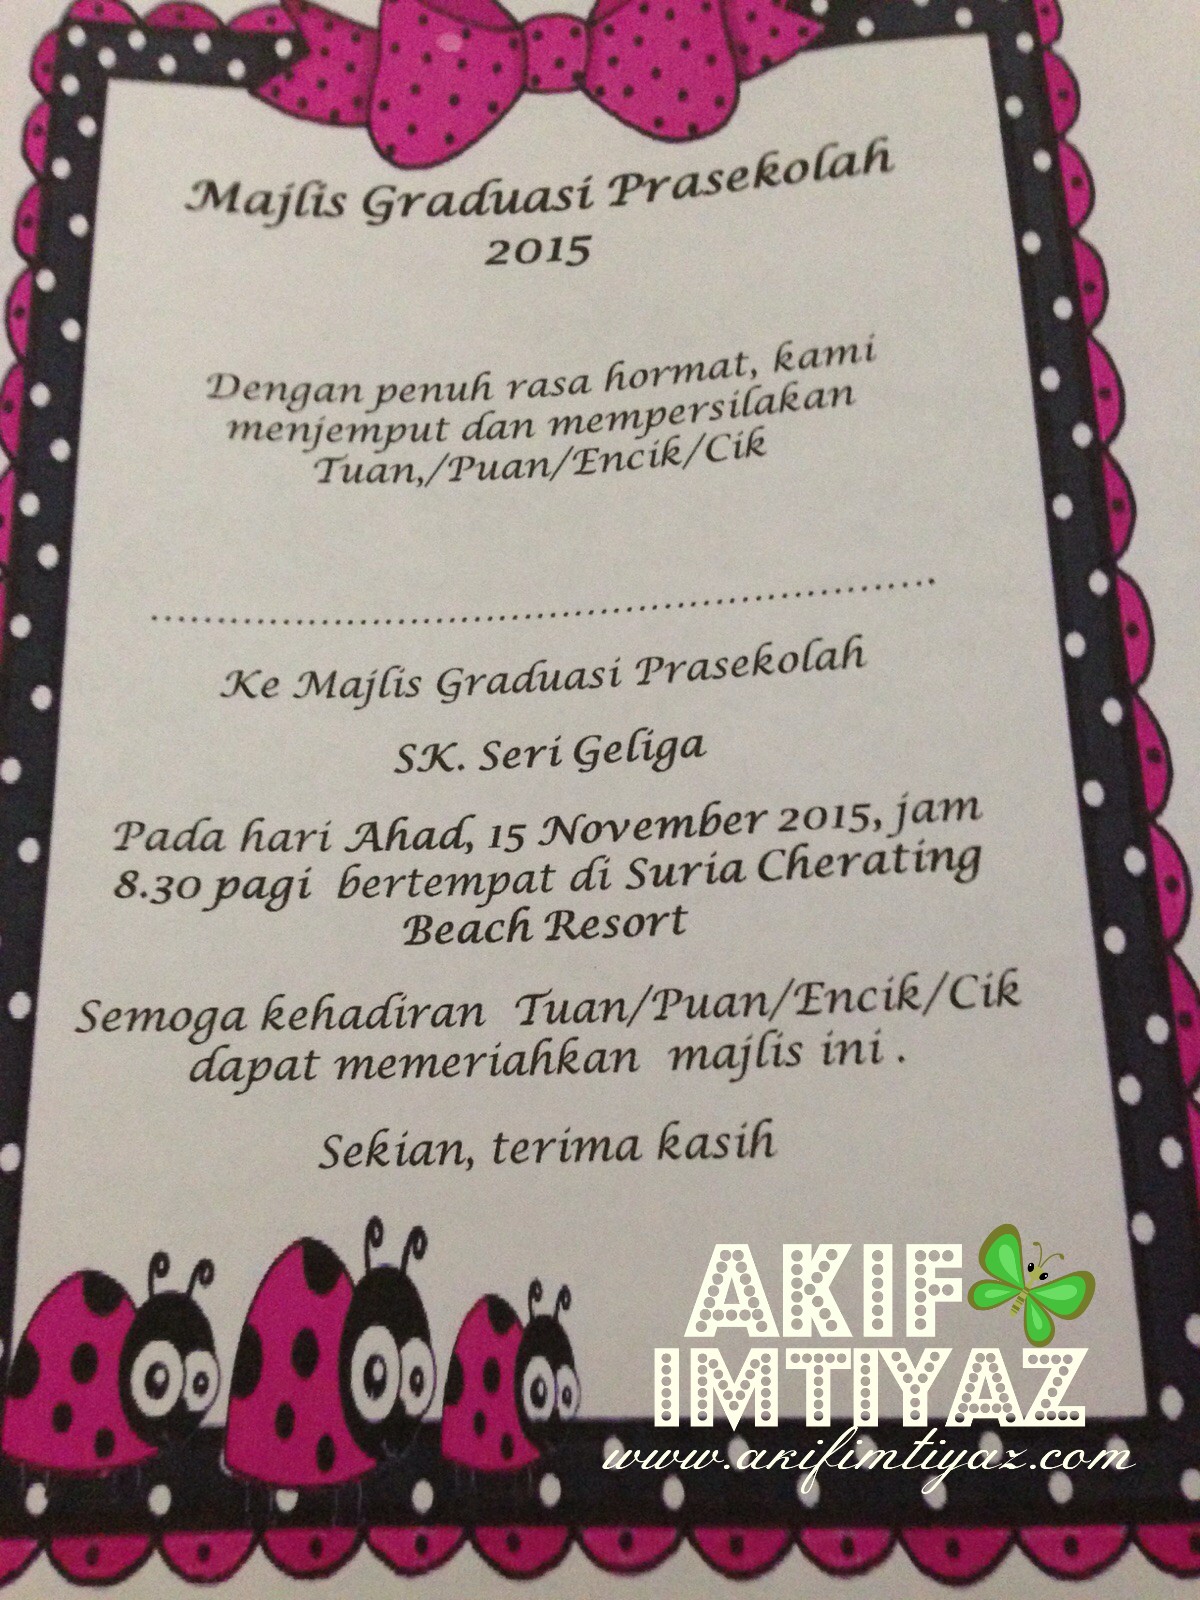 Majlis Graduasi PraSekolah SKSG 2015  Akif Imtiyaz